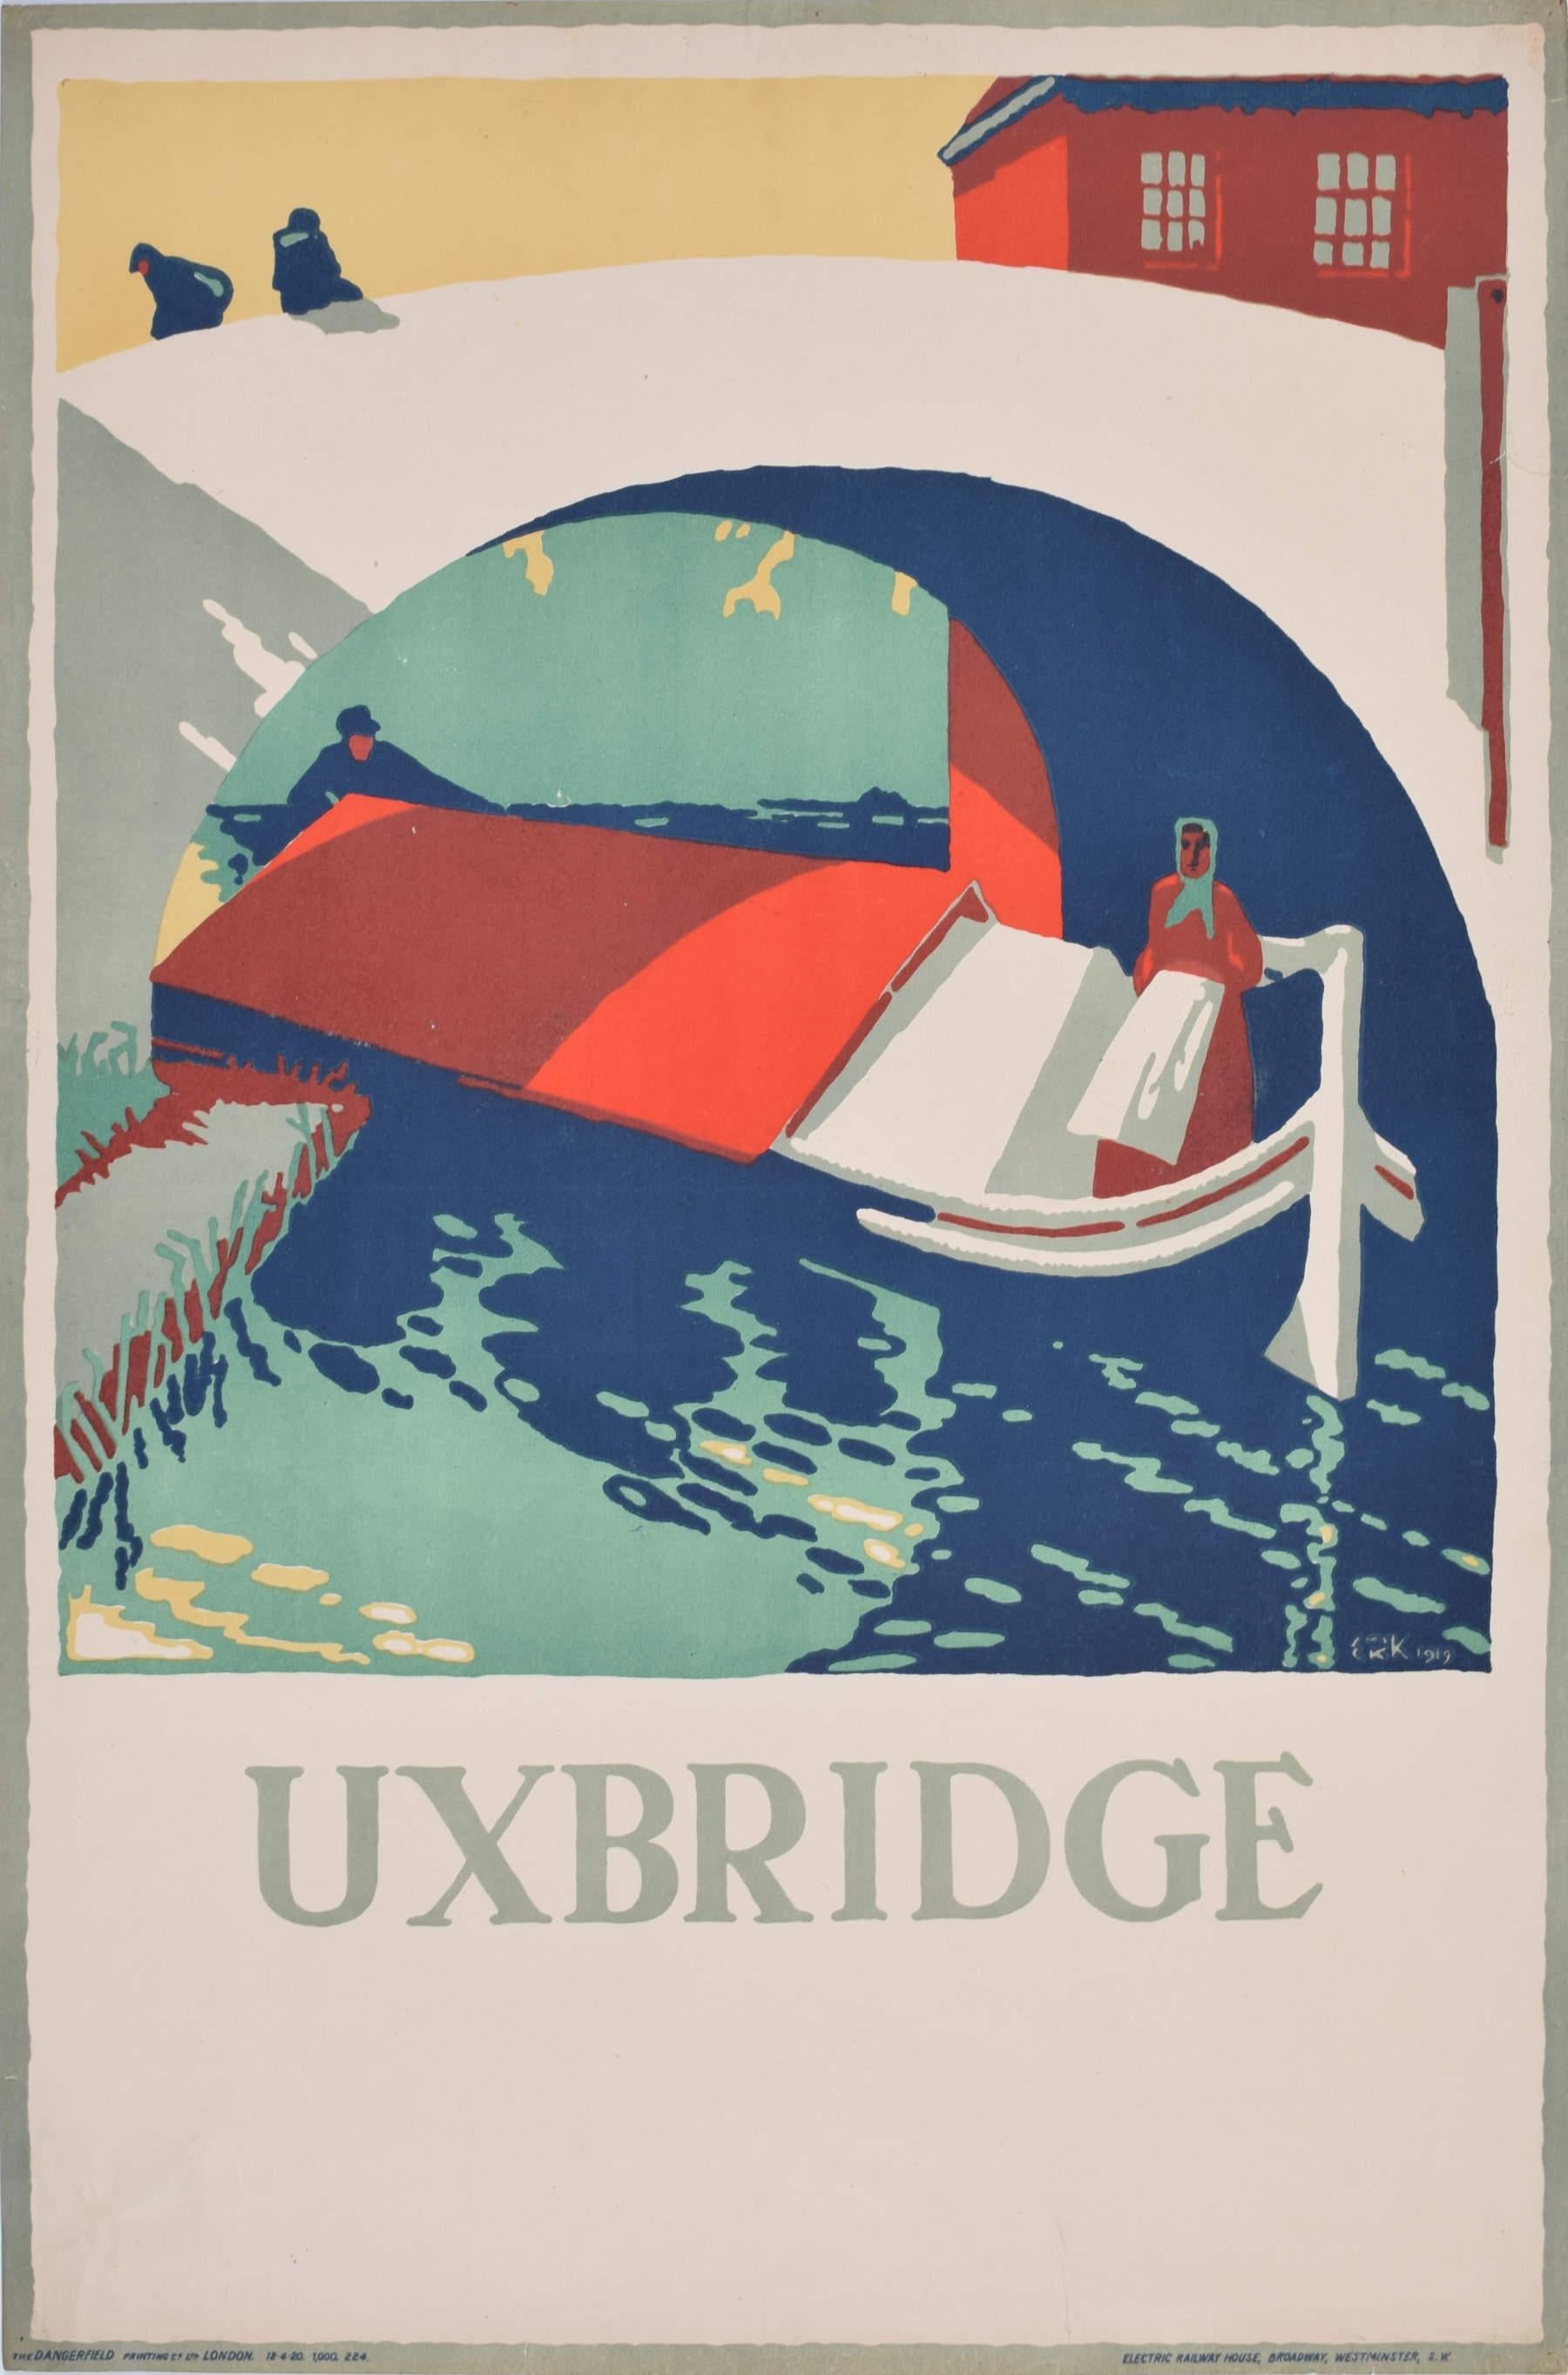 Uxbridge original vintage poster by Edward McKnight Kauffer